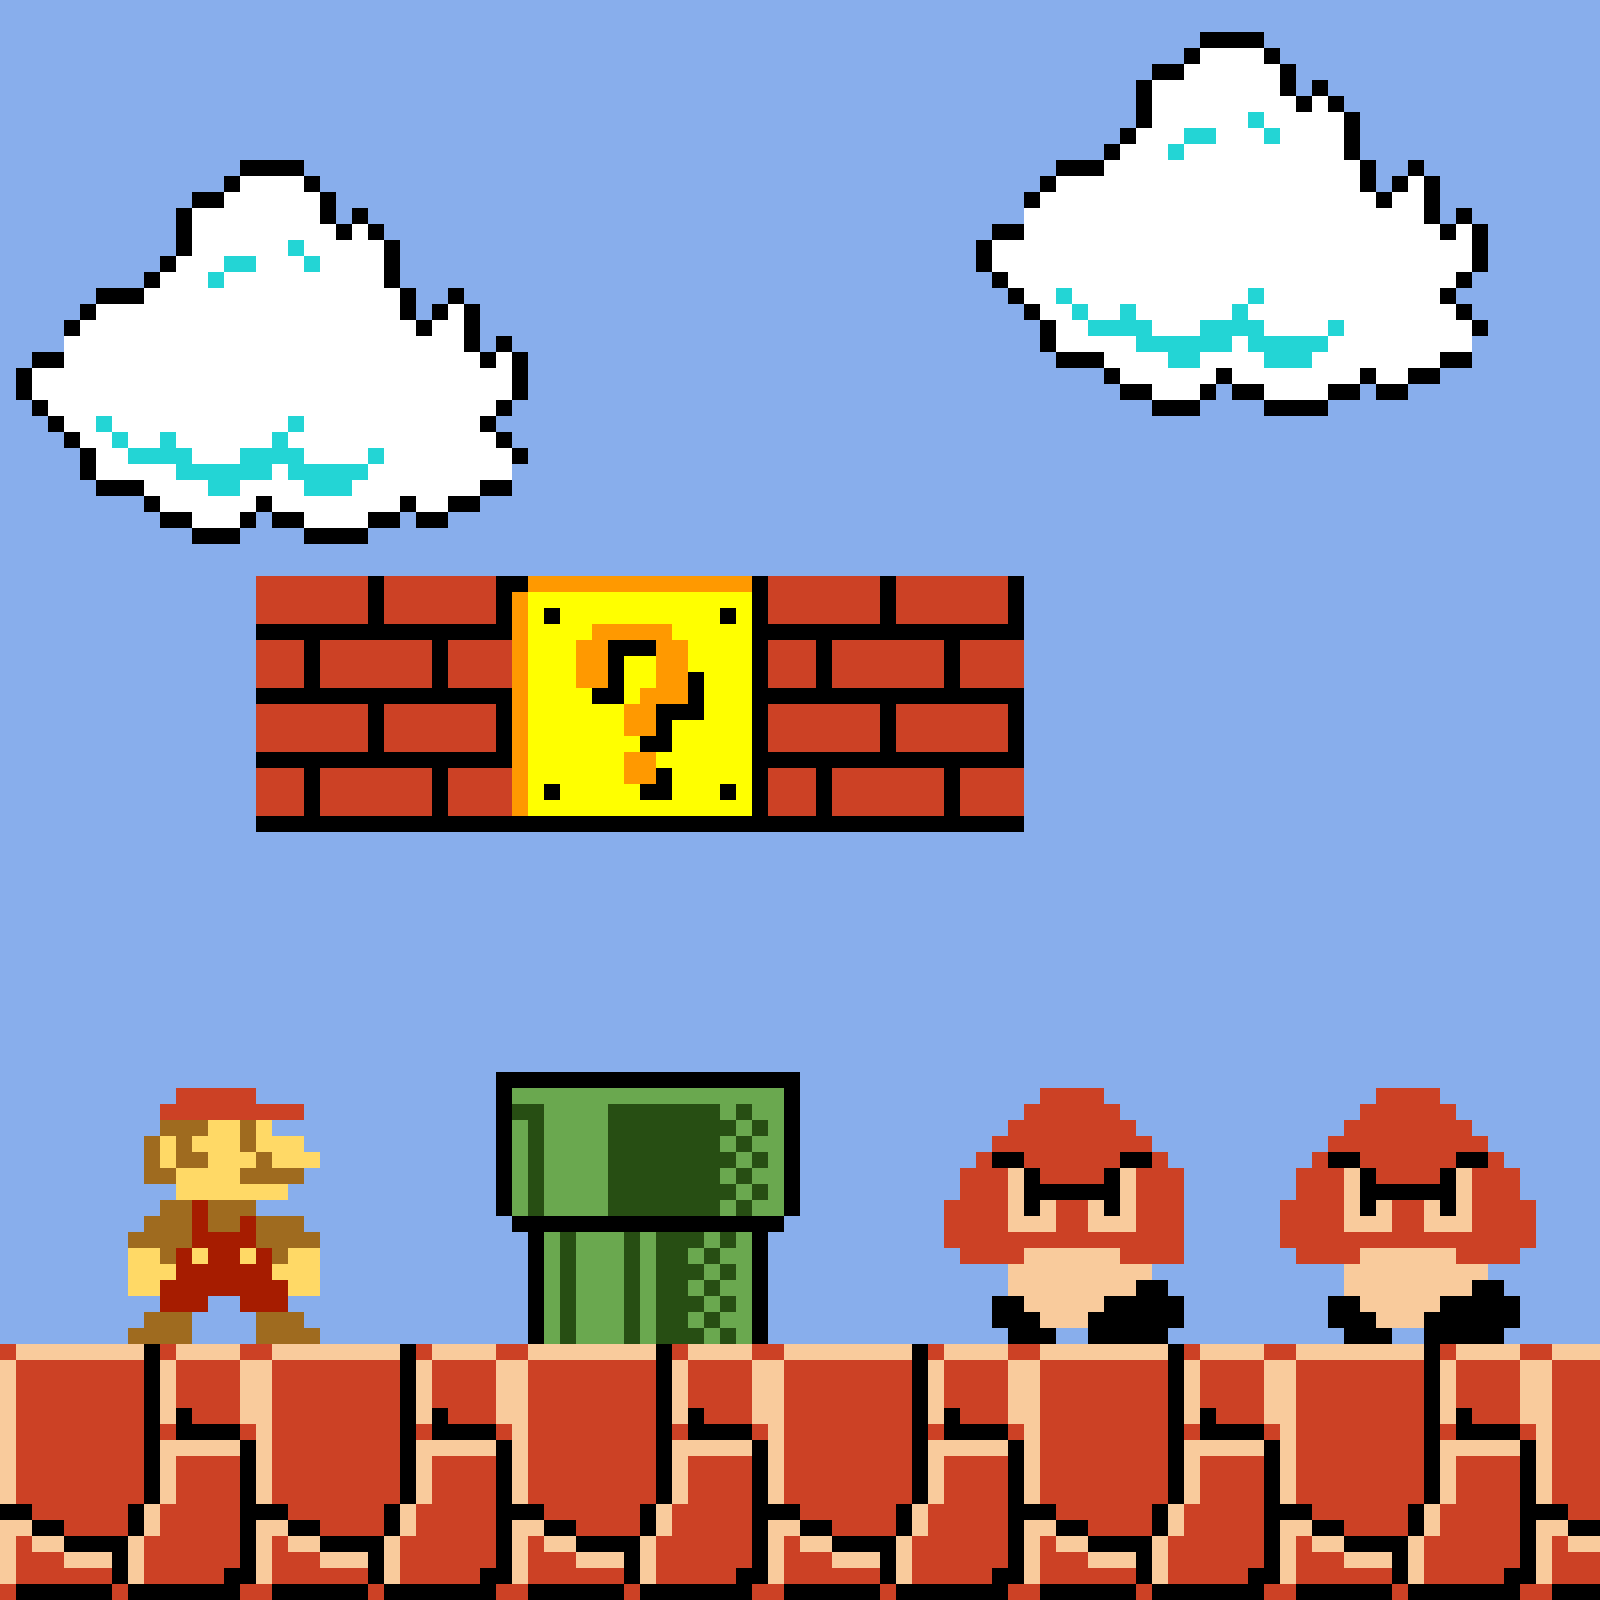 A Super Mario Bros Level